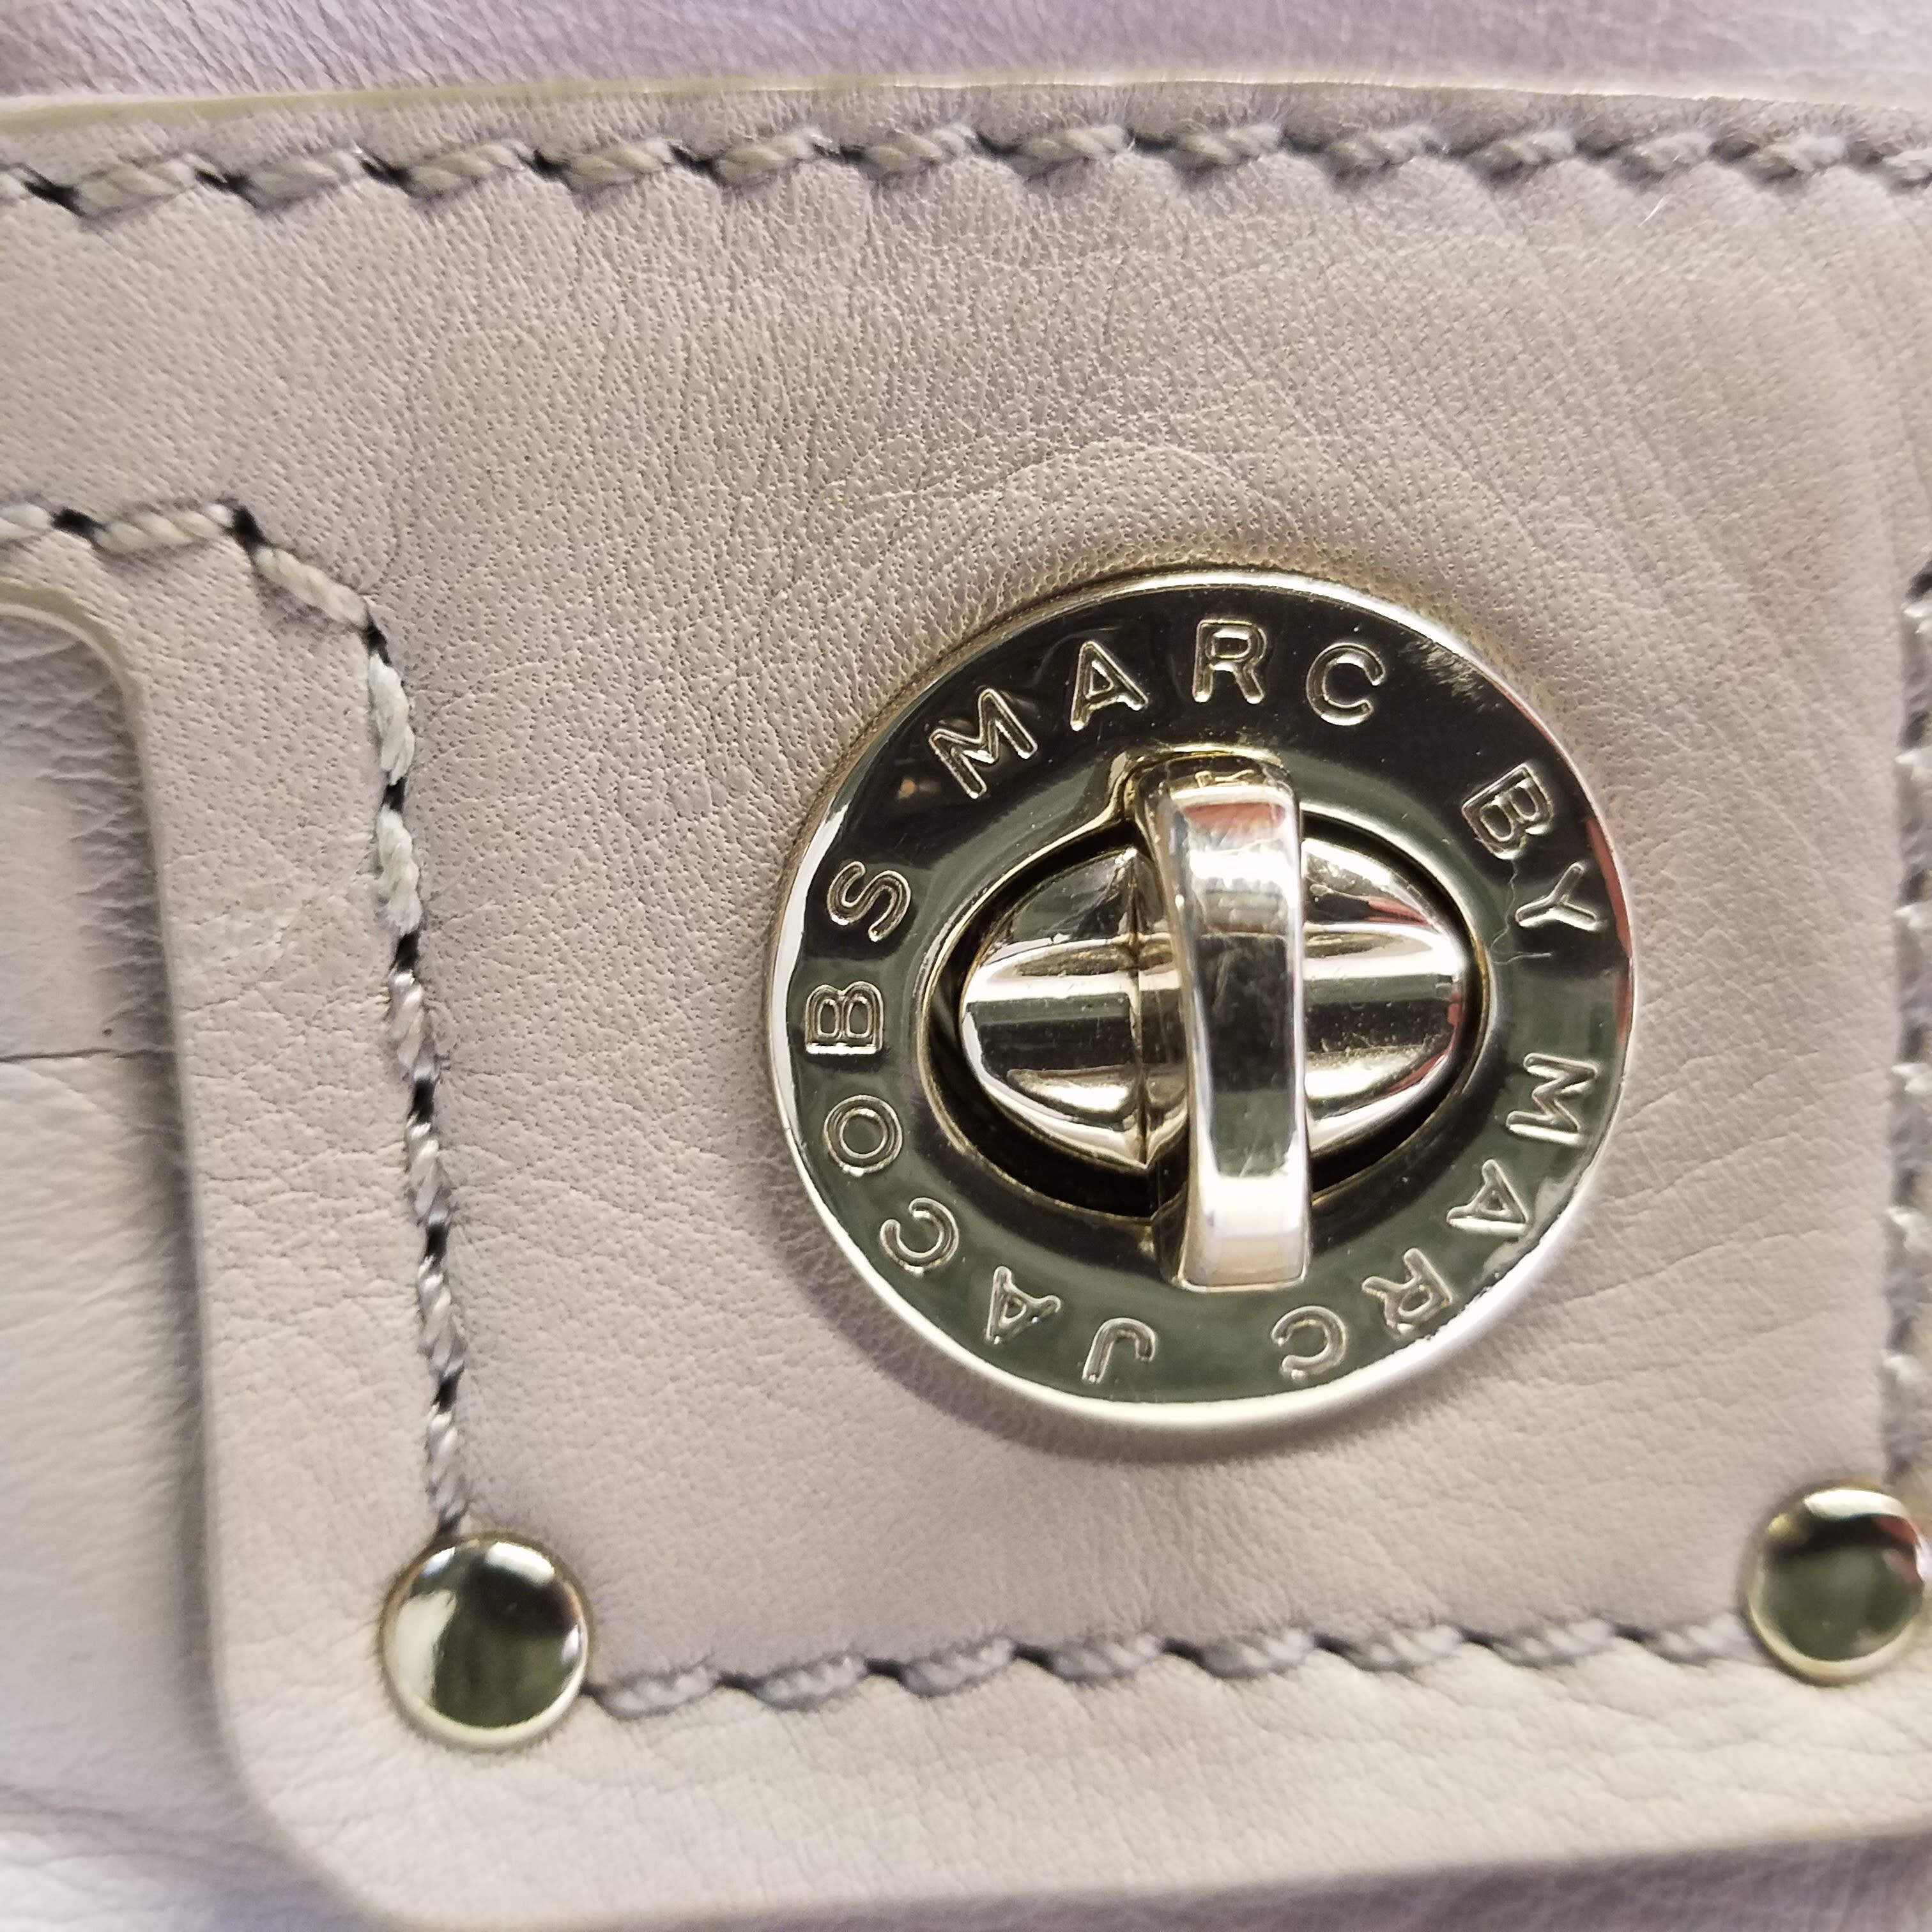 Marc Jacobs,MARC JACOBS Snapshot Daisy Print Leather Crossbody Bag - WEAR